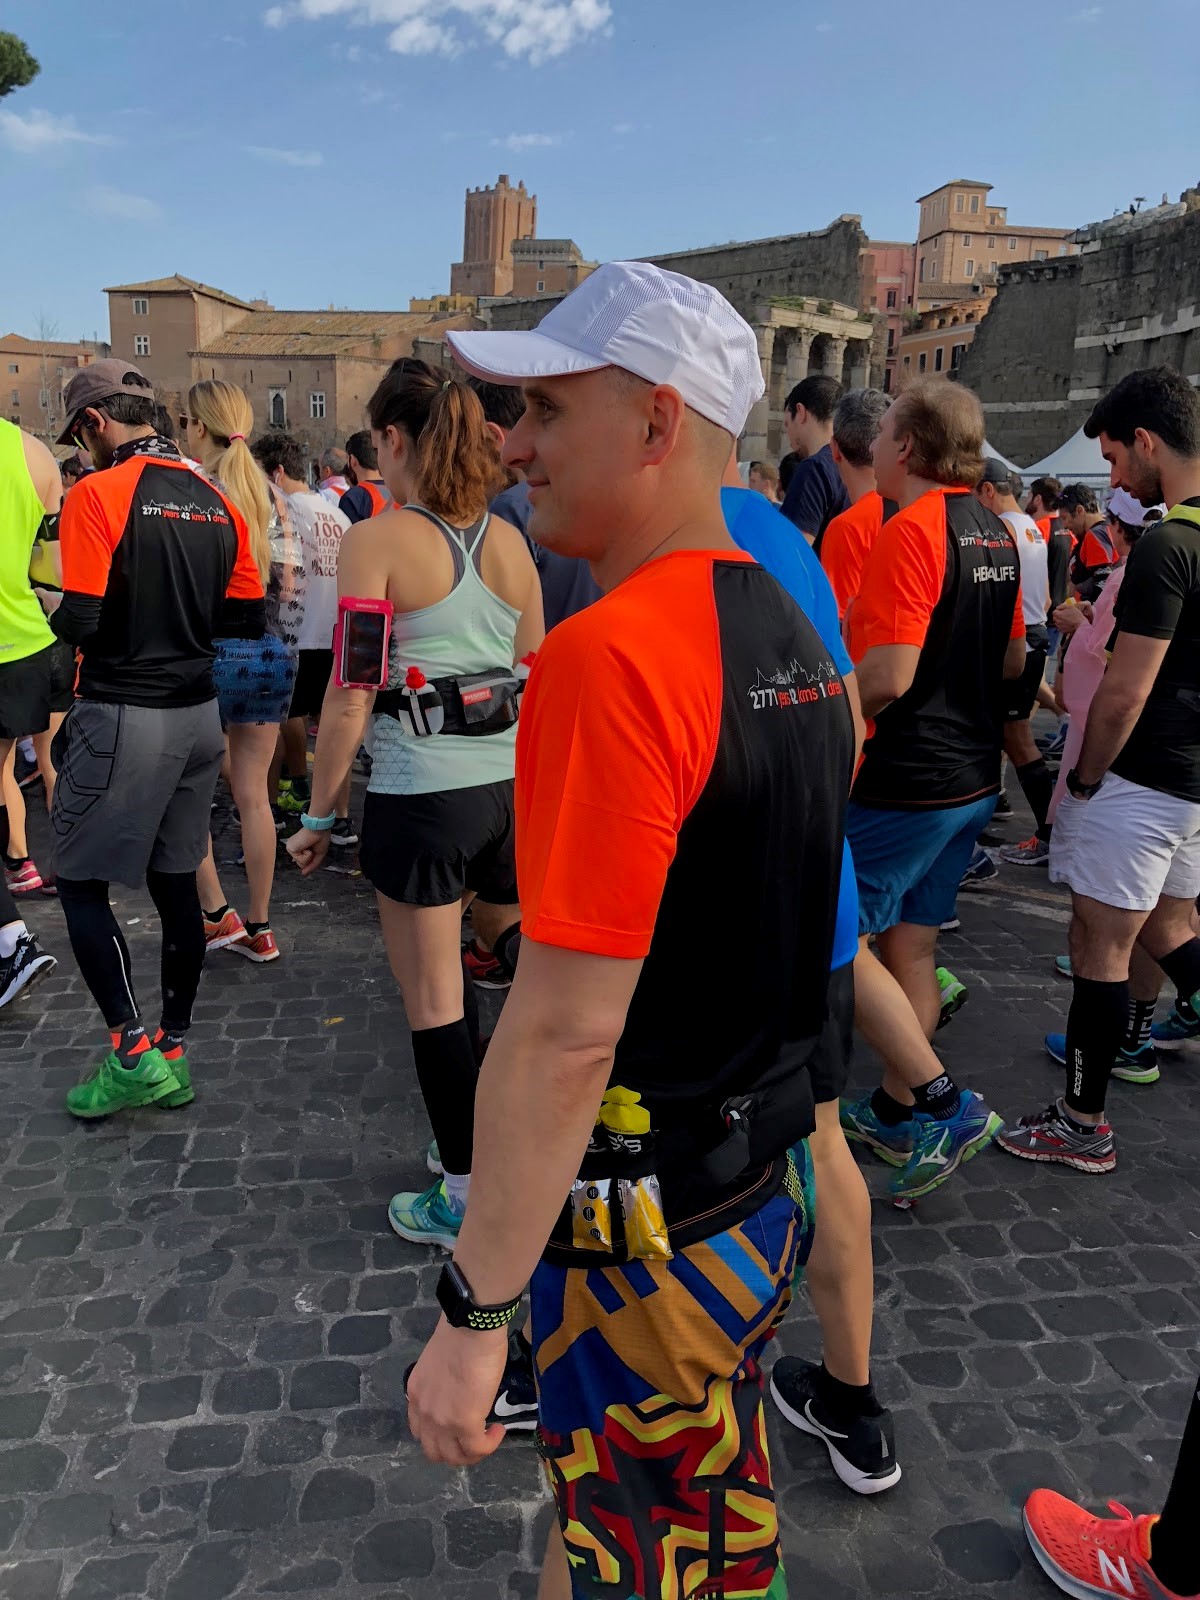 [Хабра-оффтоп] Maratona di Roma, или первый марафон для ИТ-шника - 15